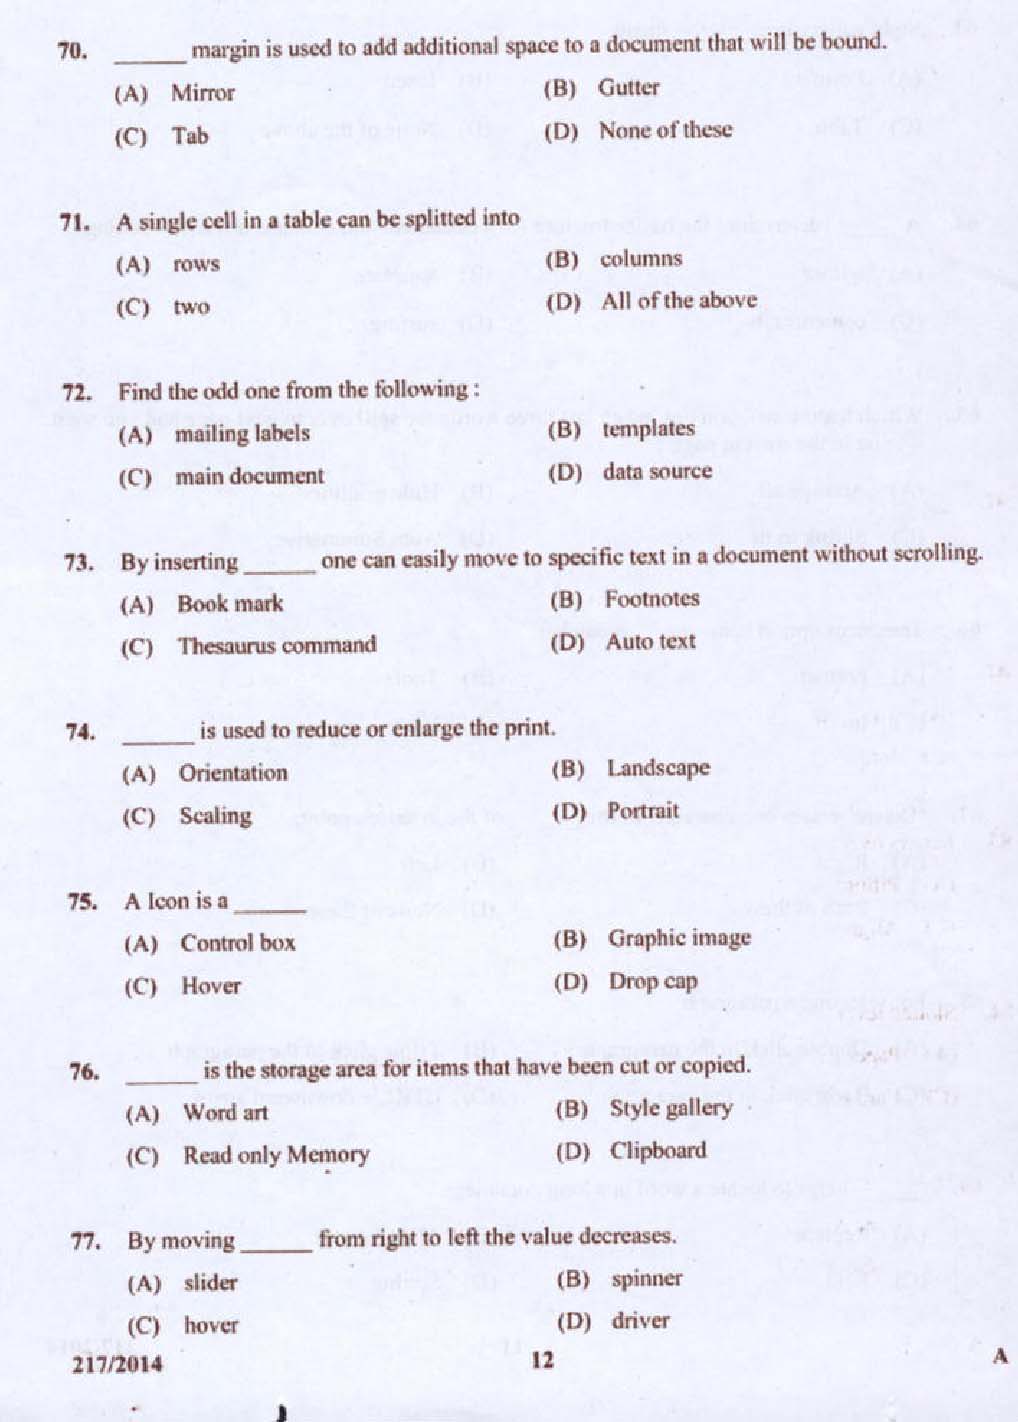 Kerala PSC Stenographer Exam 2014 Question Paper Code 2172014 12